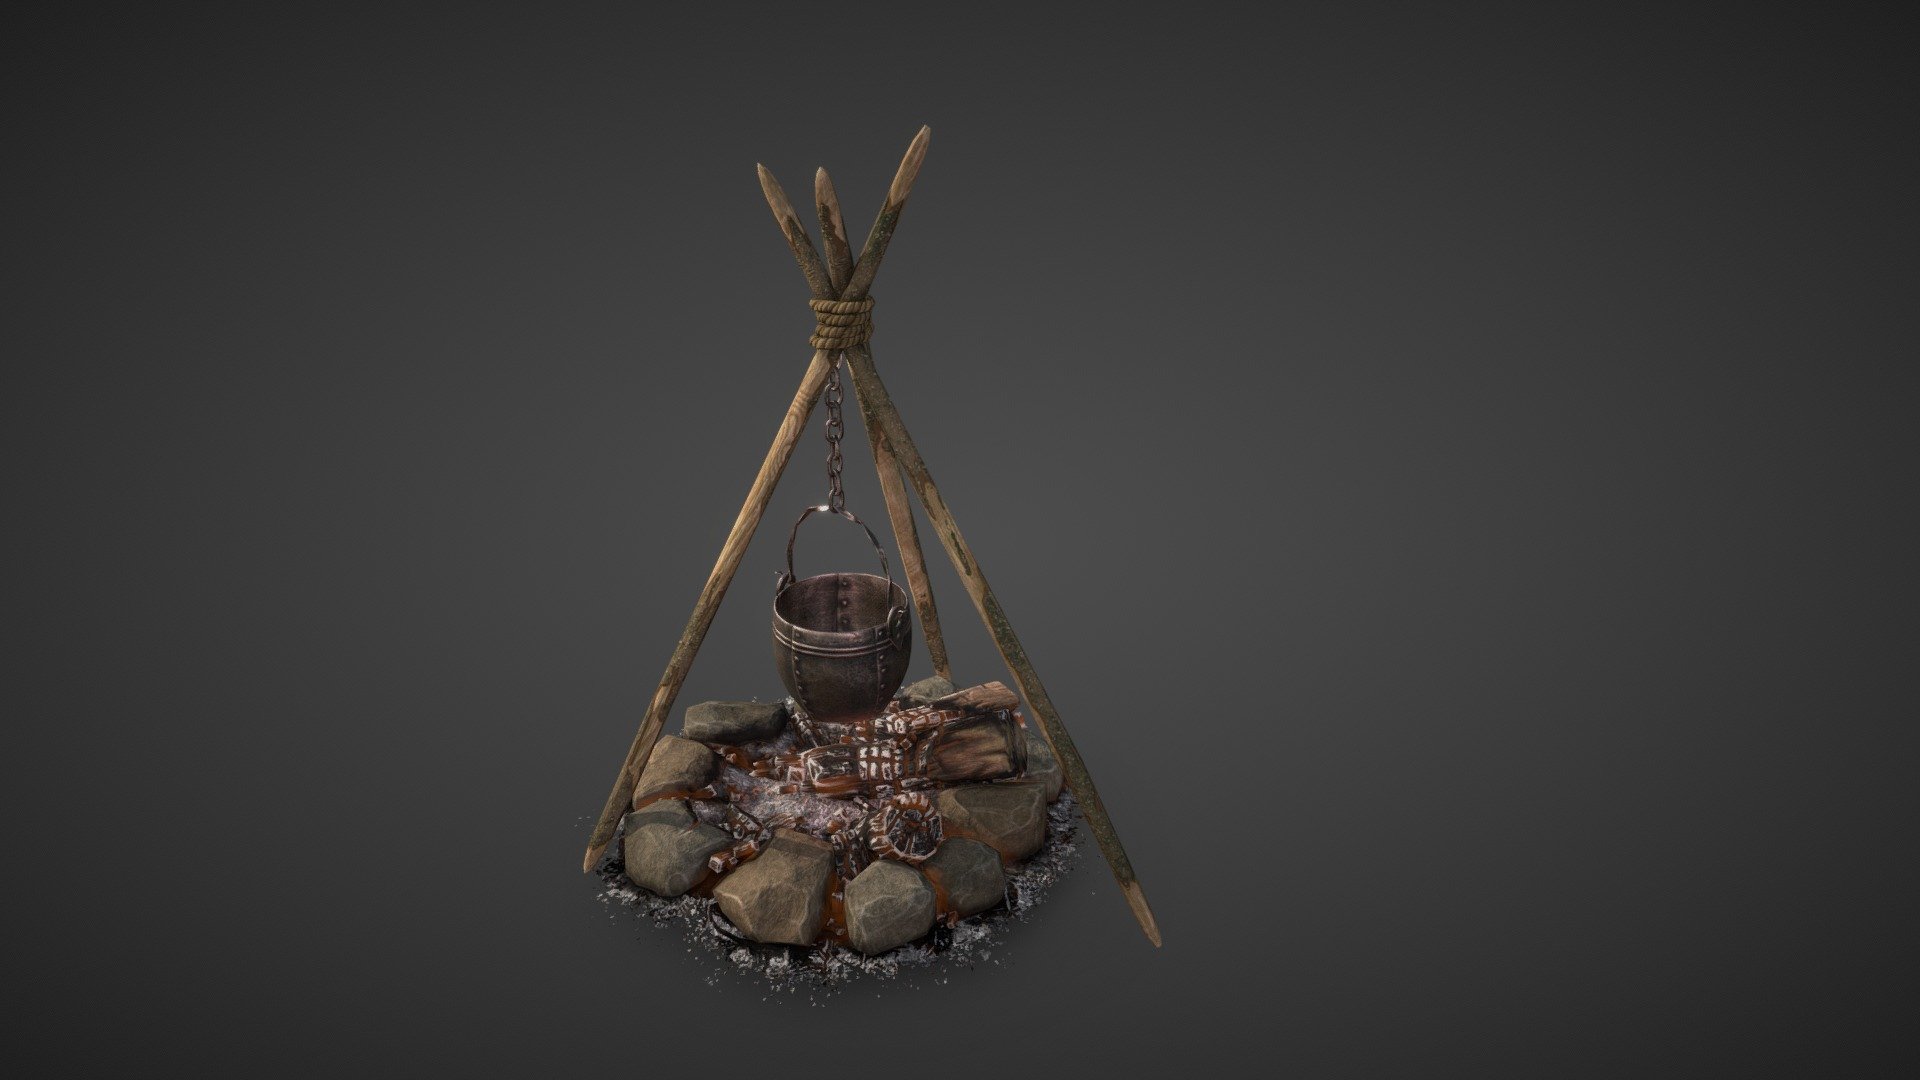 Medieval campfire for Oroliga project
https://ru.gamewaystudio.com/ - Medieval fireplace - 3D model by Fjordor (@thodoru) 3d model